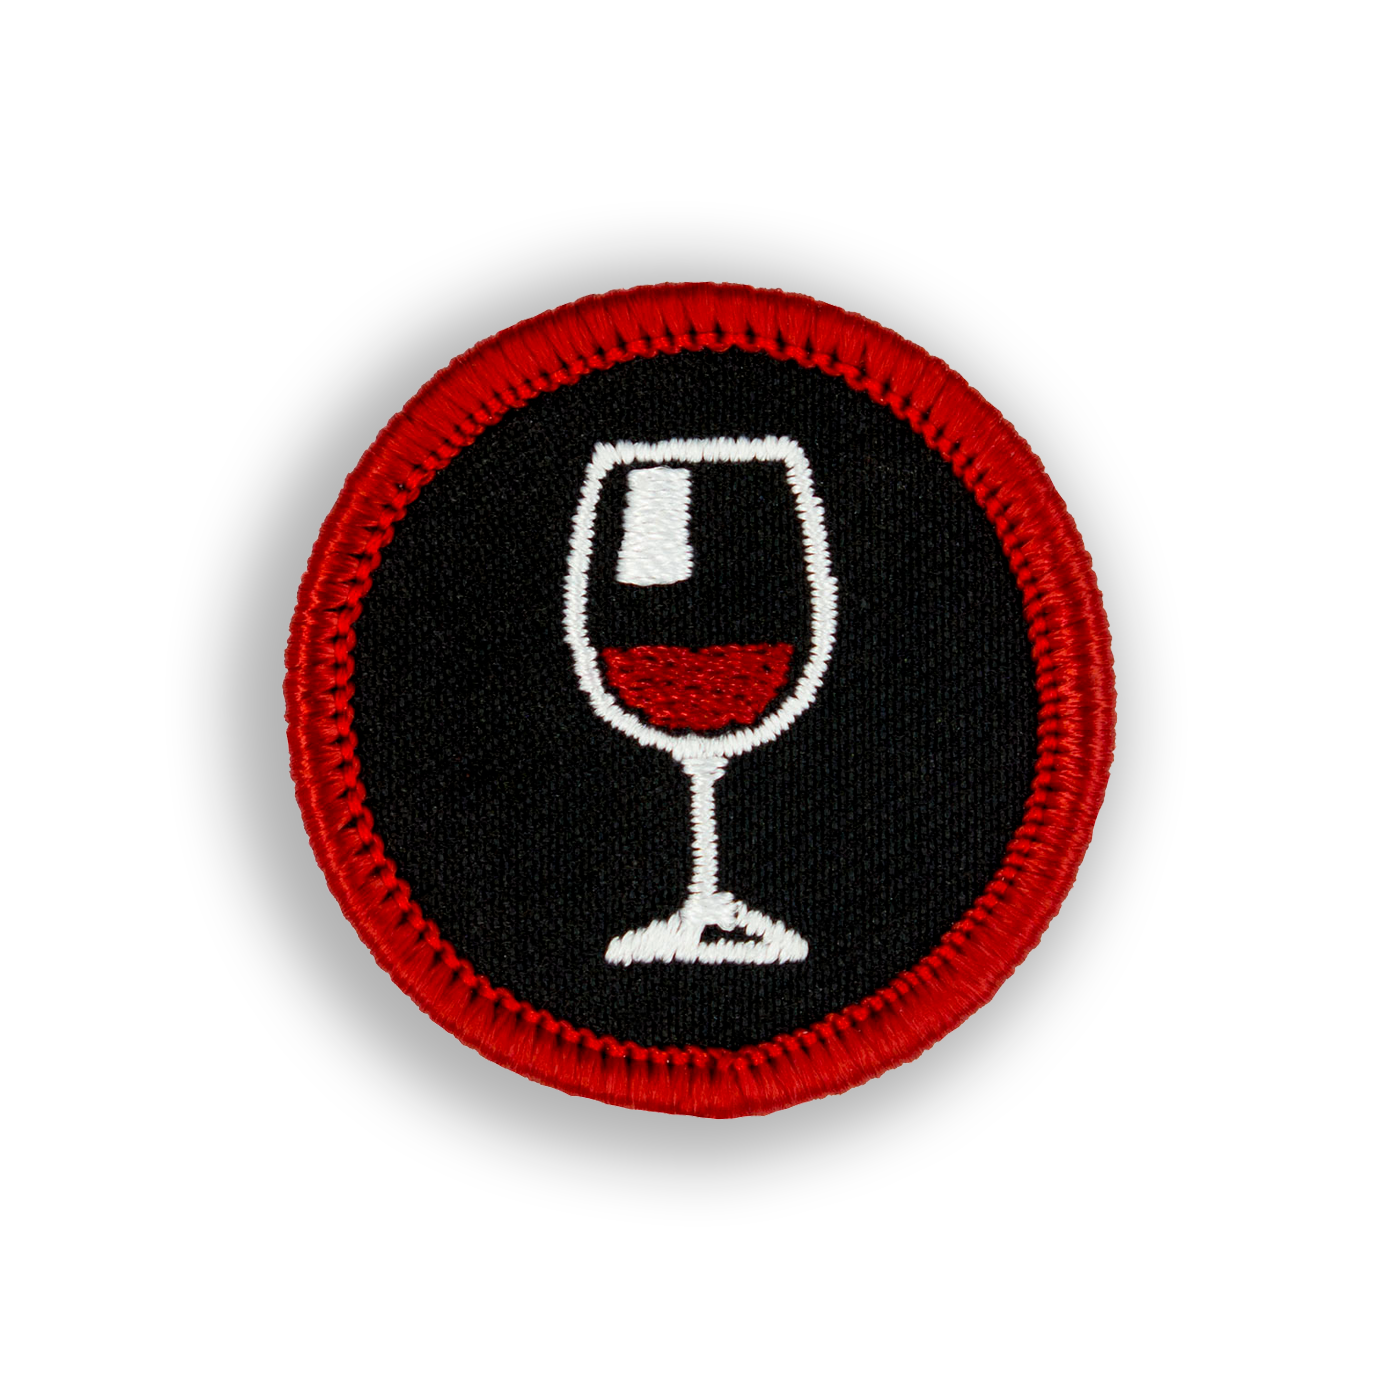 Red Wine Fanatic Patch | Demerit Wear - Fake Merit Badges